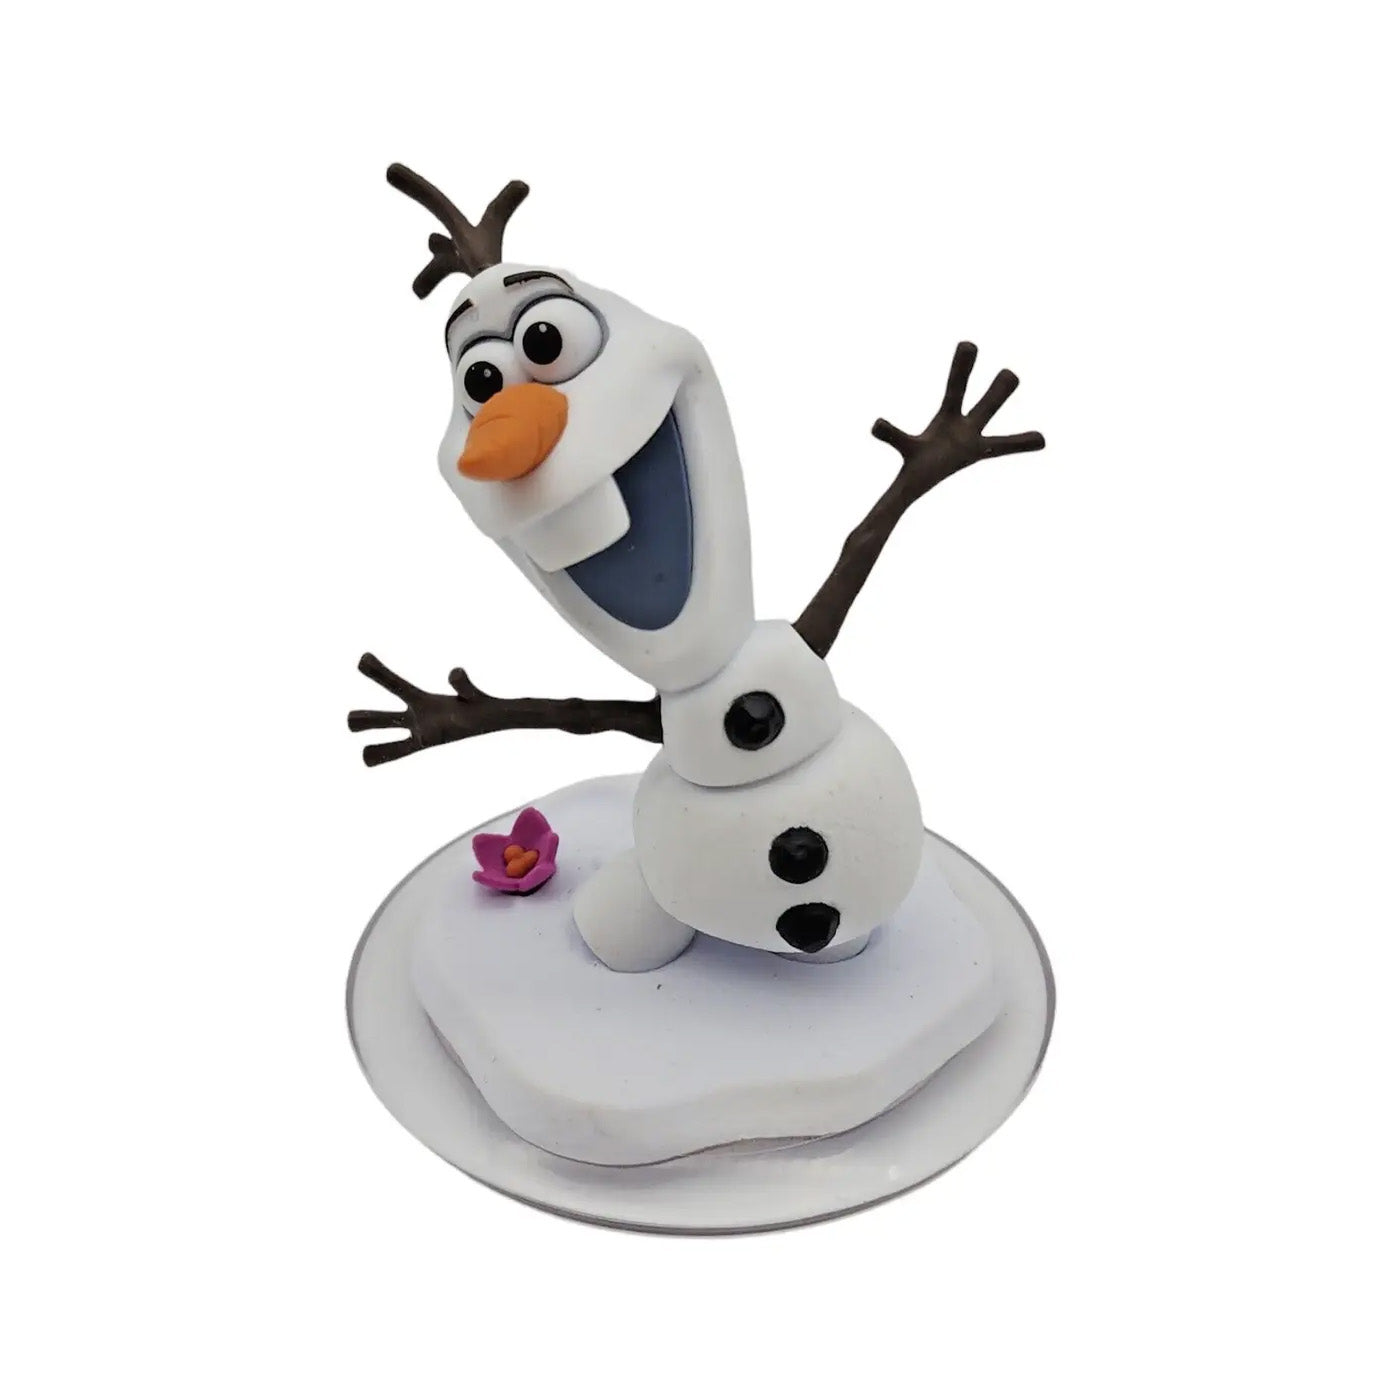 Disney Infinity 3.0 Character: Olaf